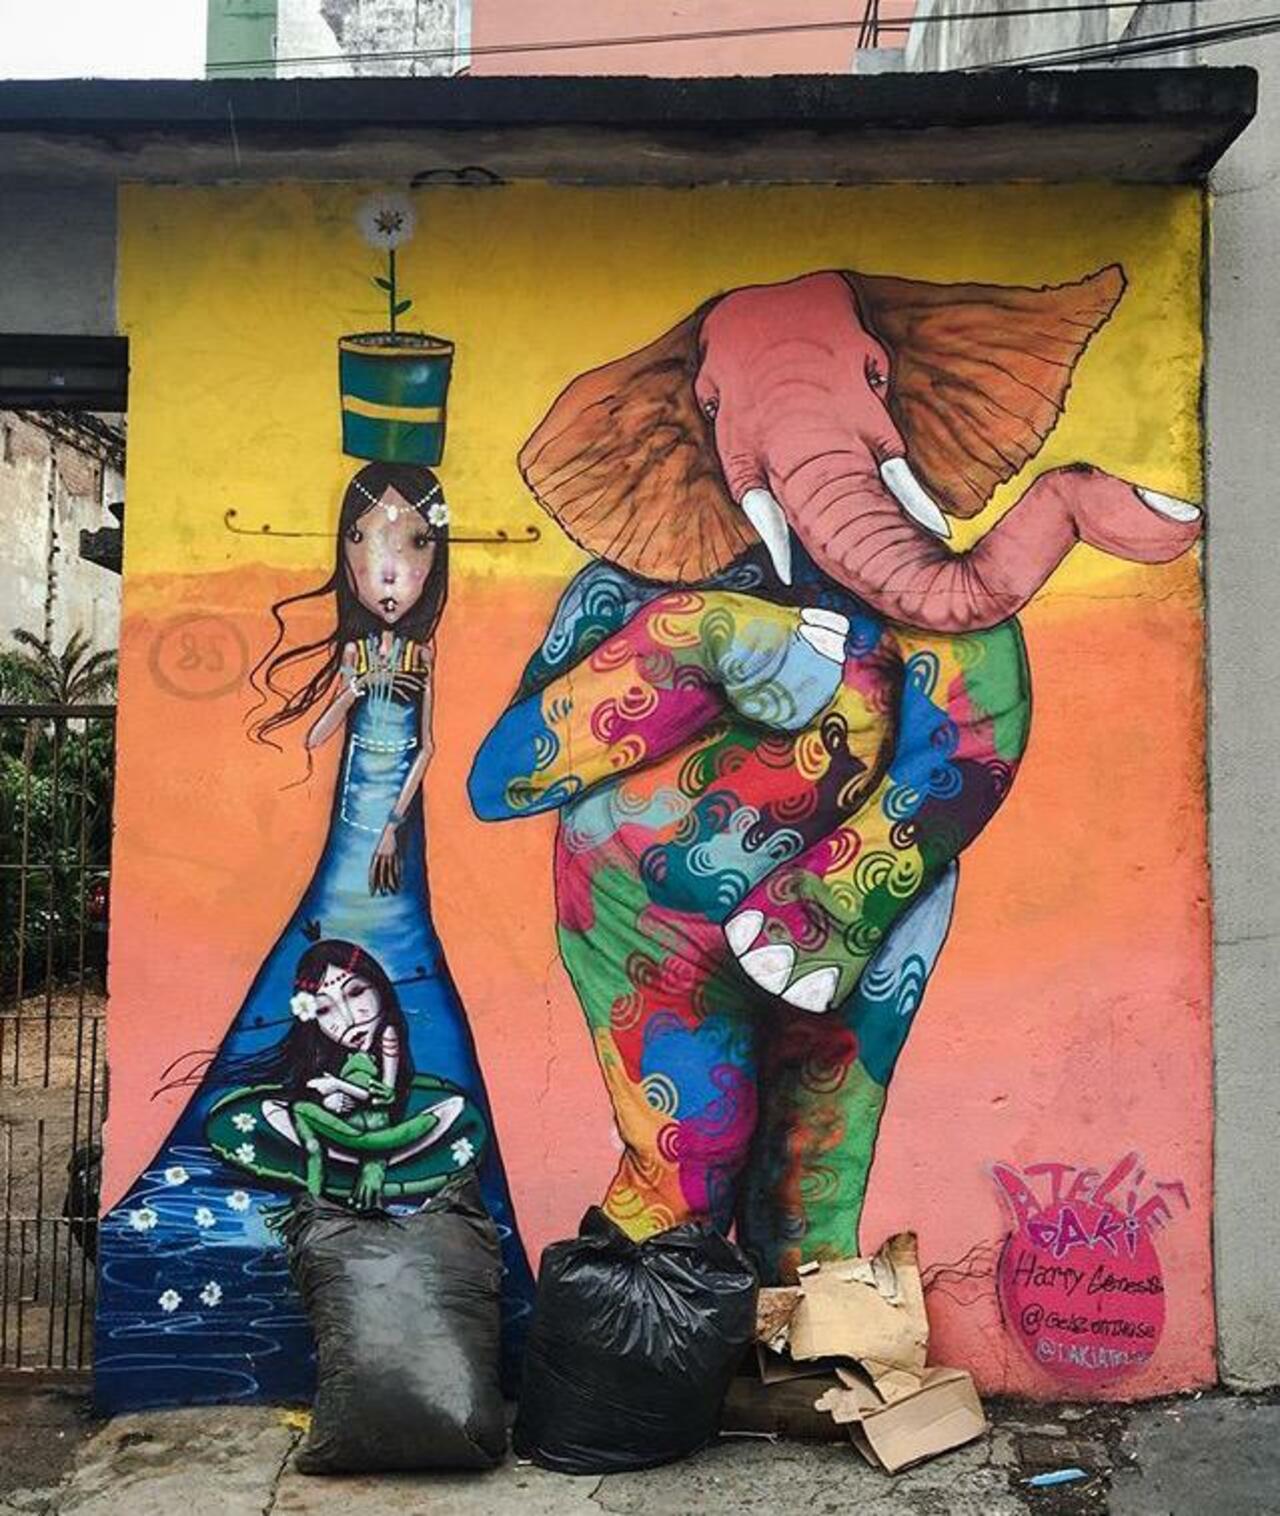 Street Art by Harry Geneis & Gelson in São Paulo 

#art #mural #graffiti #streetart http://t.co/SlLbhuMZfD … … … http://twitter.com/GoogleStreetArt/status/648016473831645184/photo/1/large?utm_source=fb&utm_medium=fb&utm_campaign=charlesjackso14&utm_content=648017888343912448